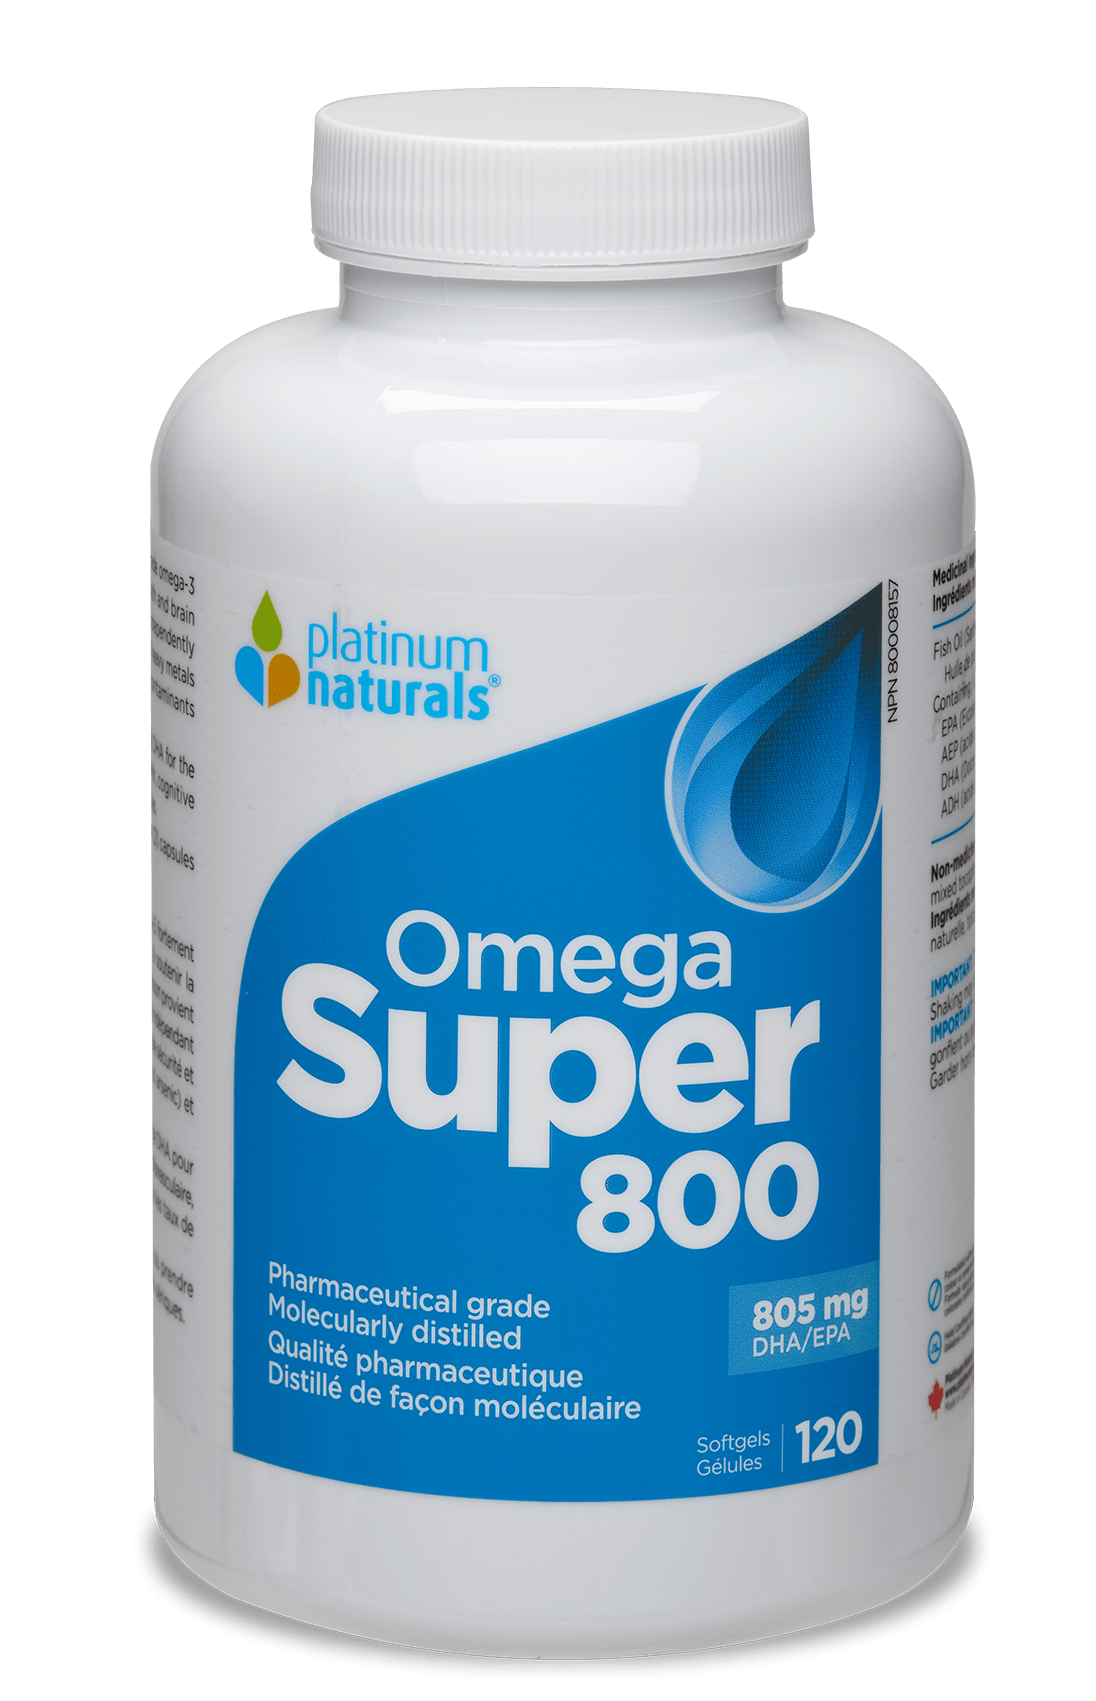 Super Diet Oméga 3 DHA EPA capsules - Fonction cardiaque - Poisson